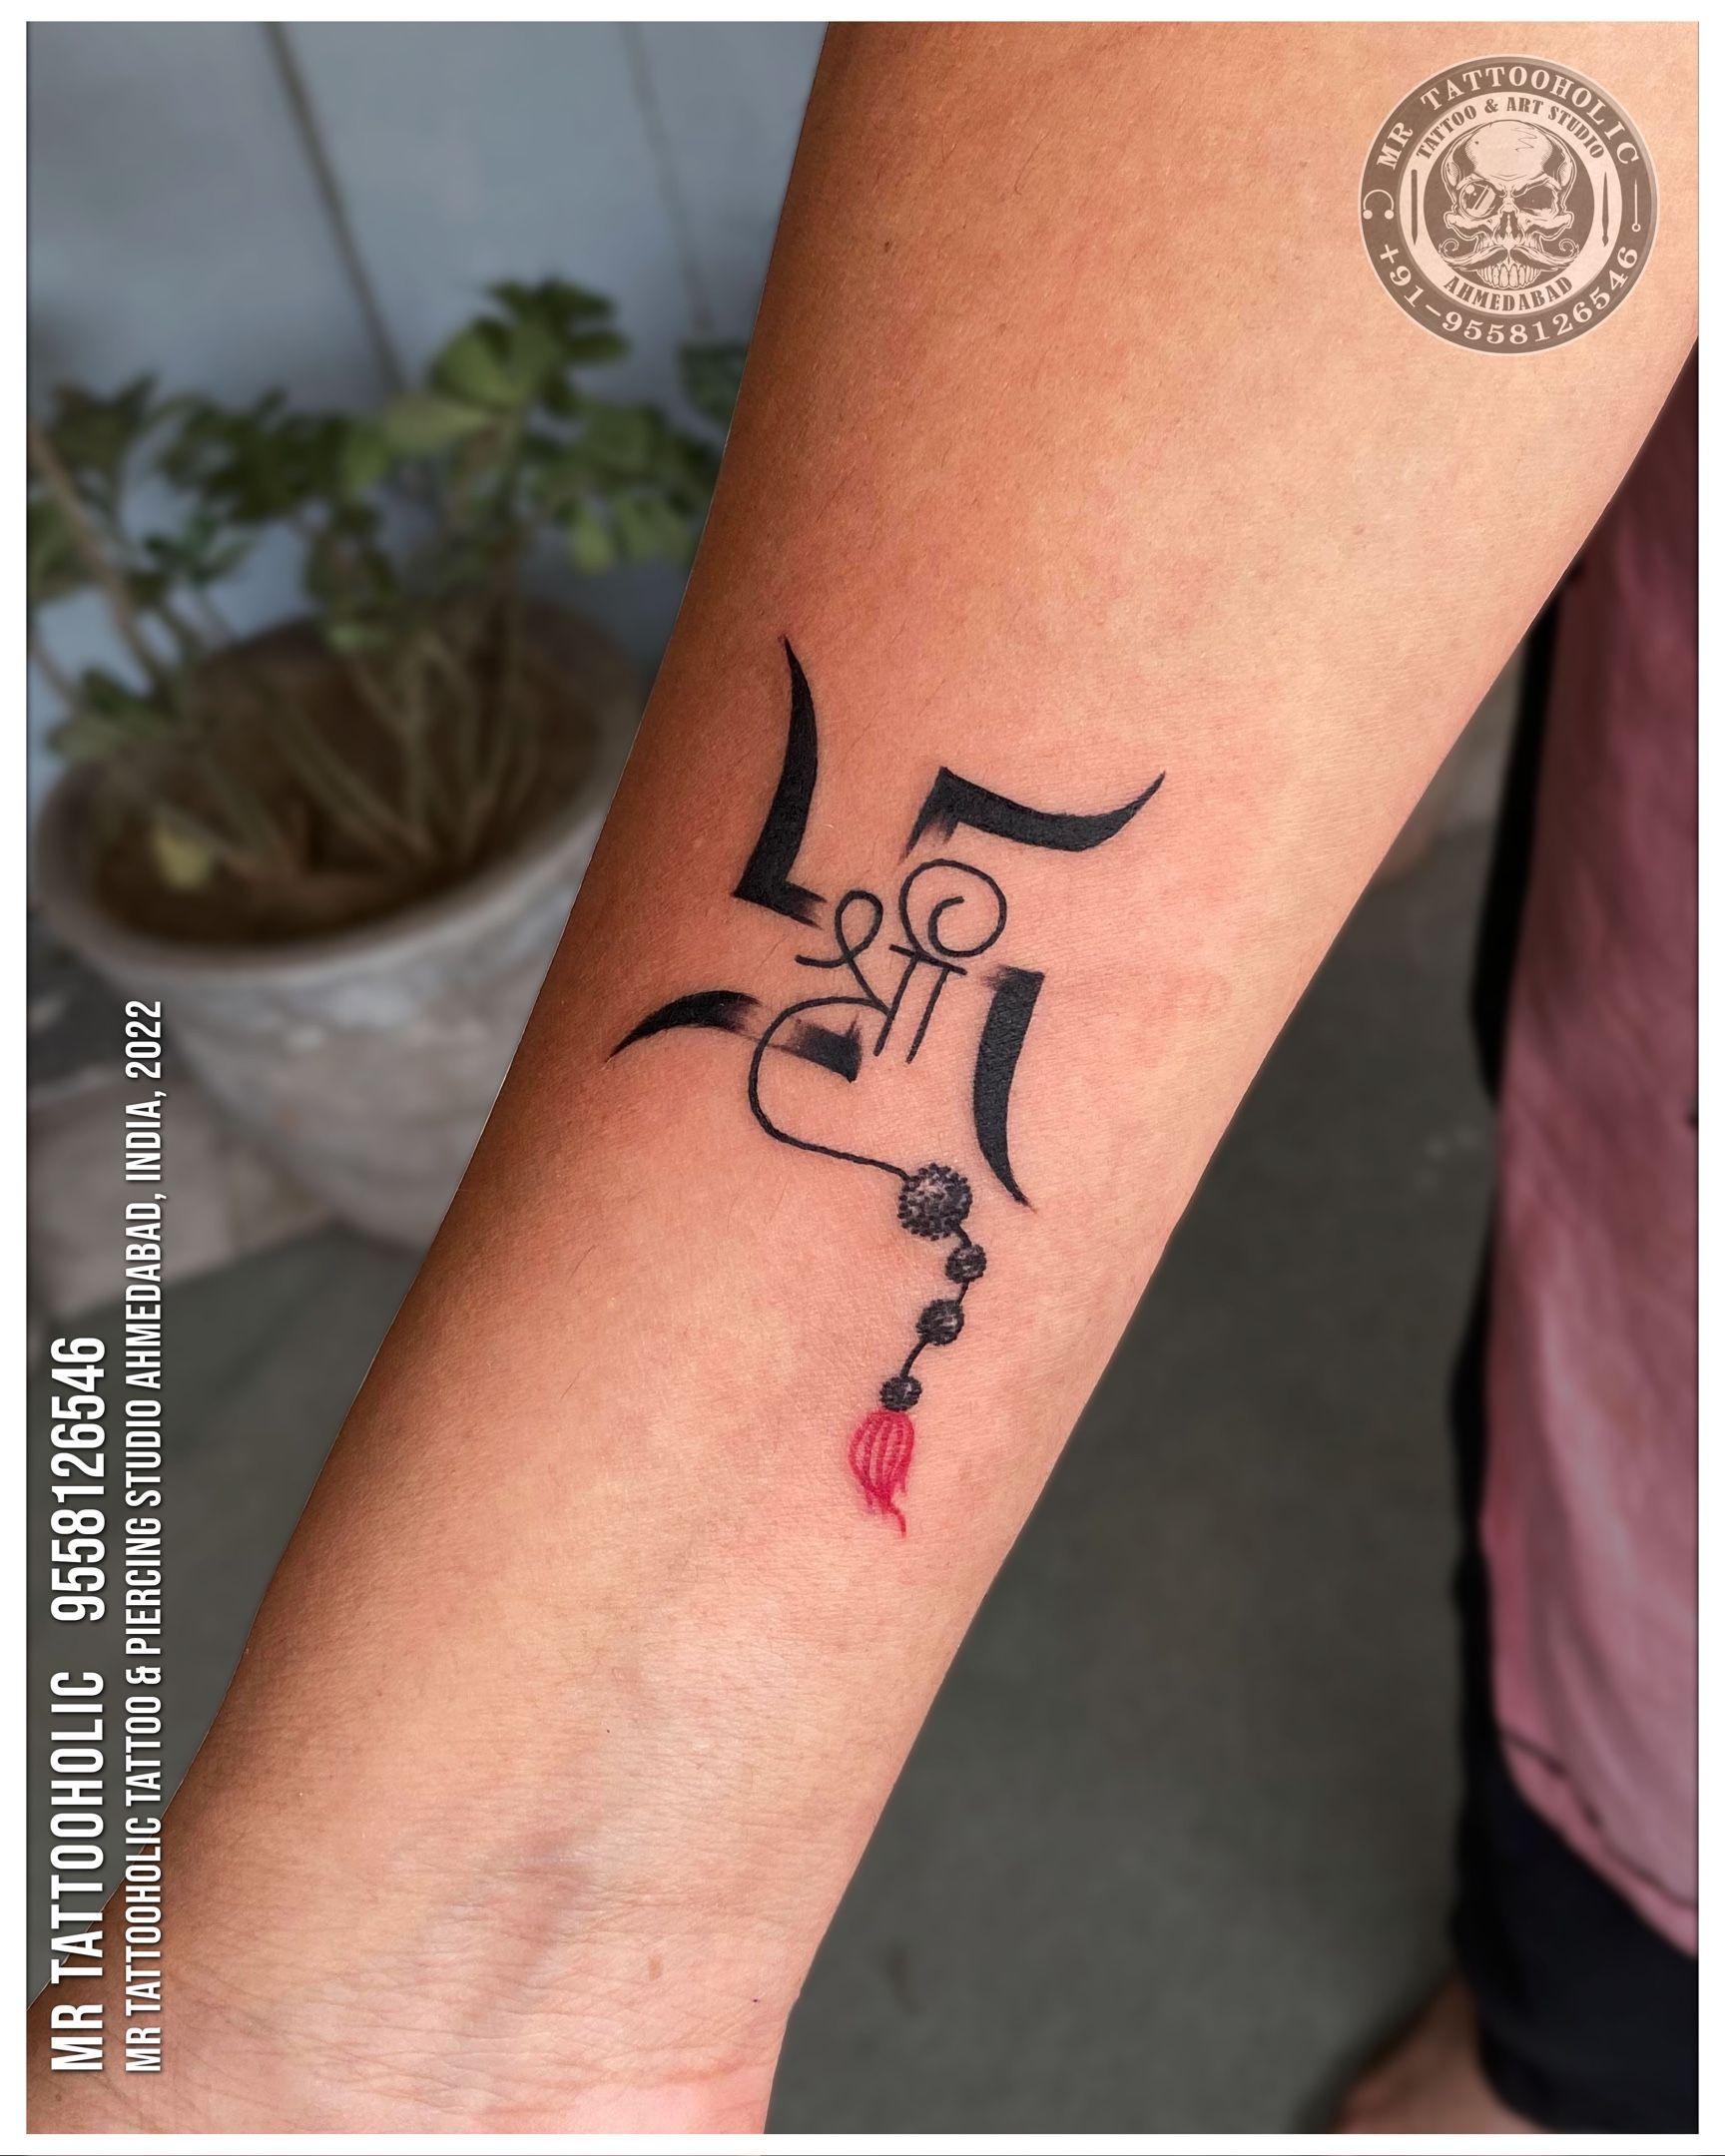 Details more than 73 shri tattoo design latest  thtantai2